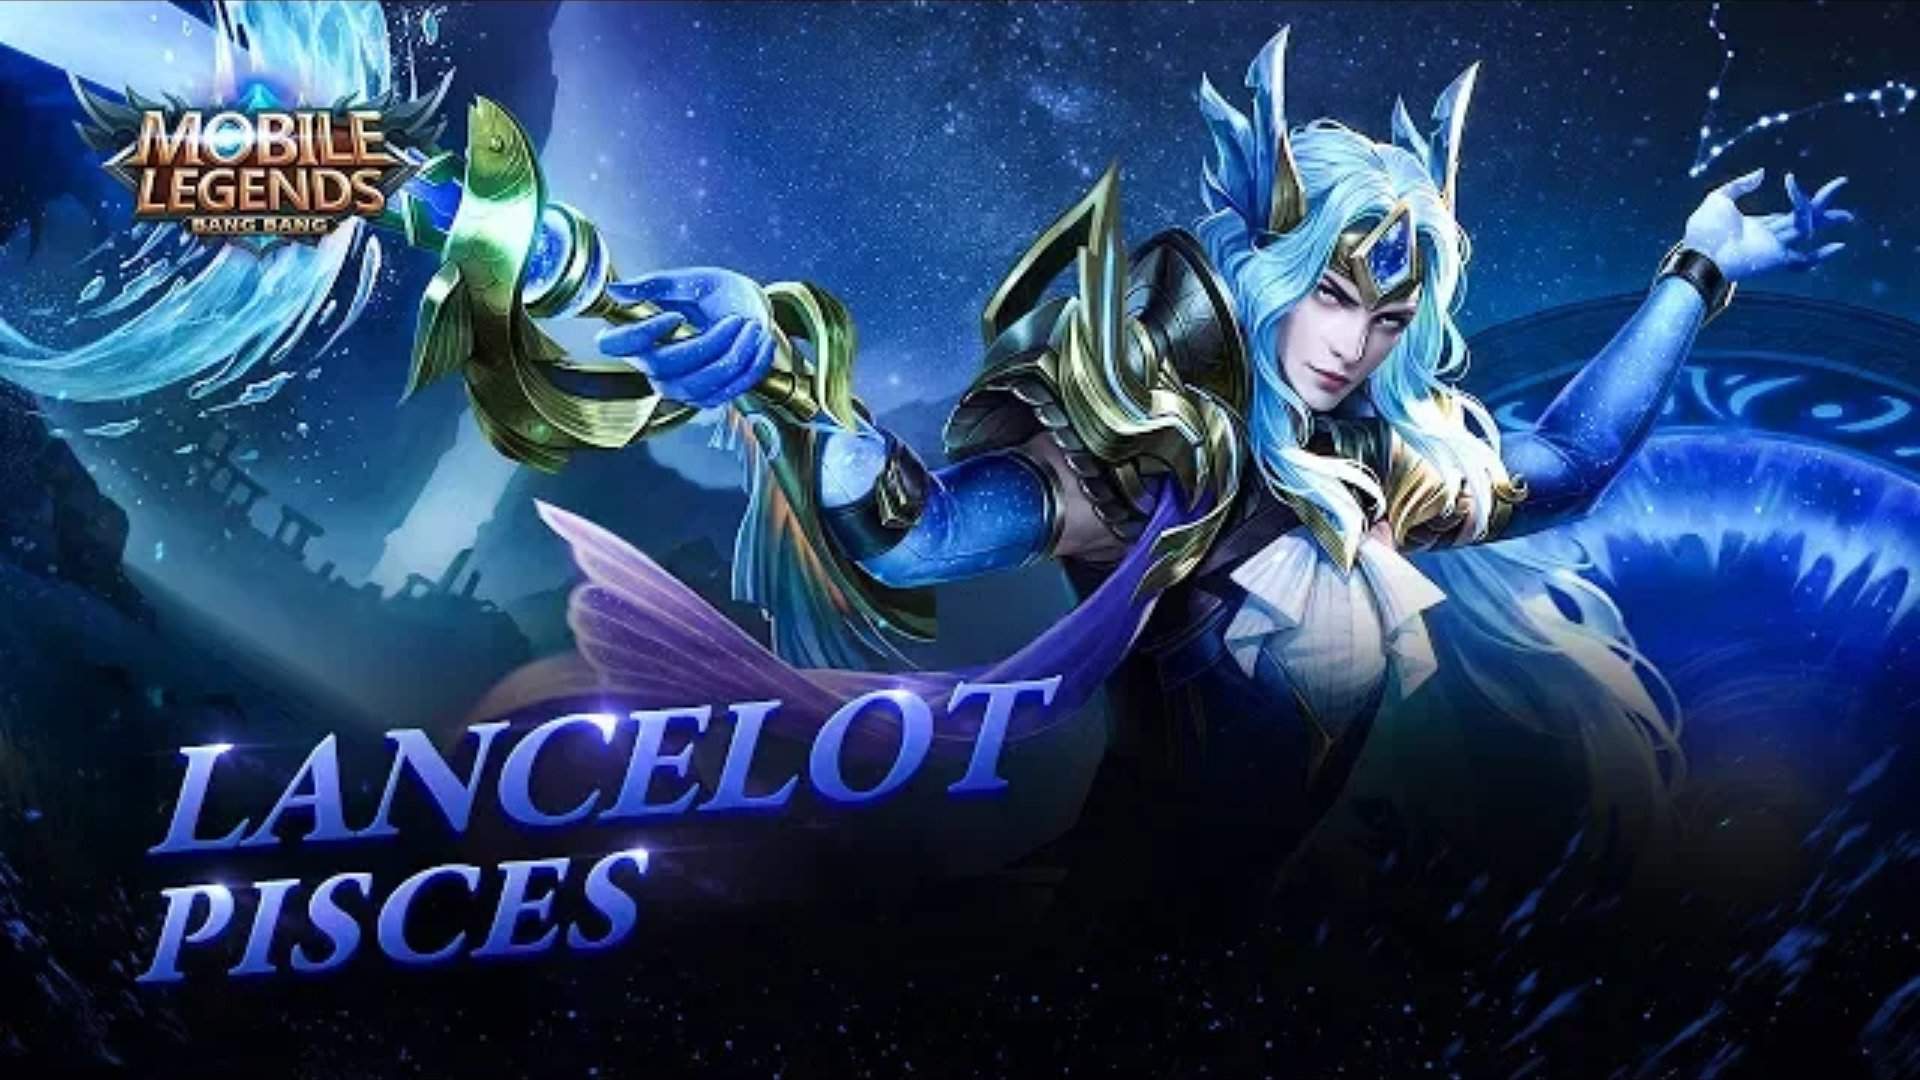 New Skin Lancelot zodiac Pisces. Mobile Legends Amino Amino